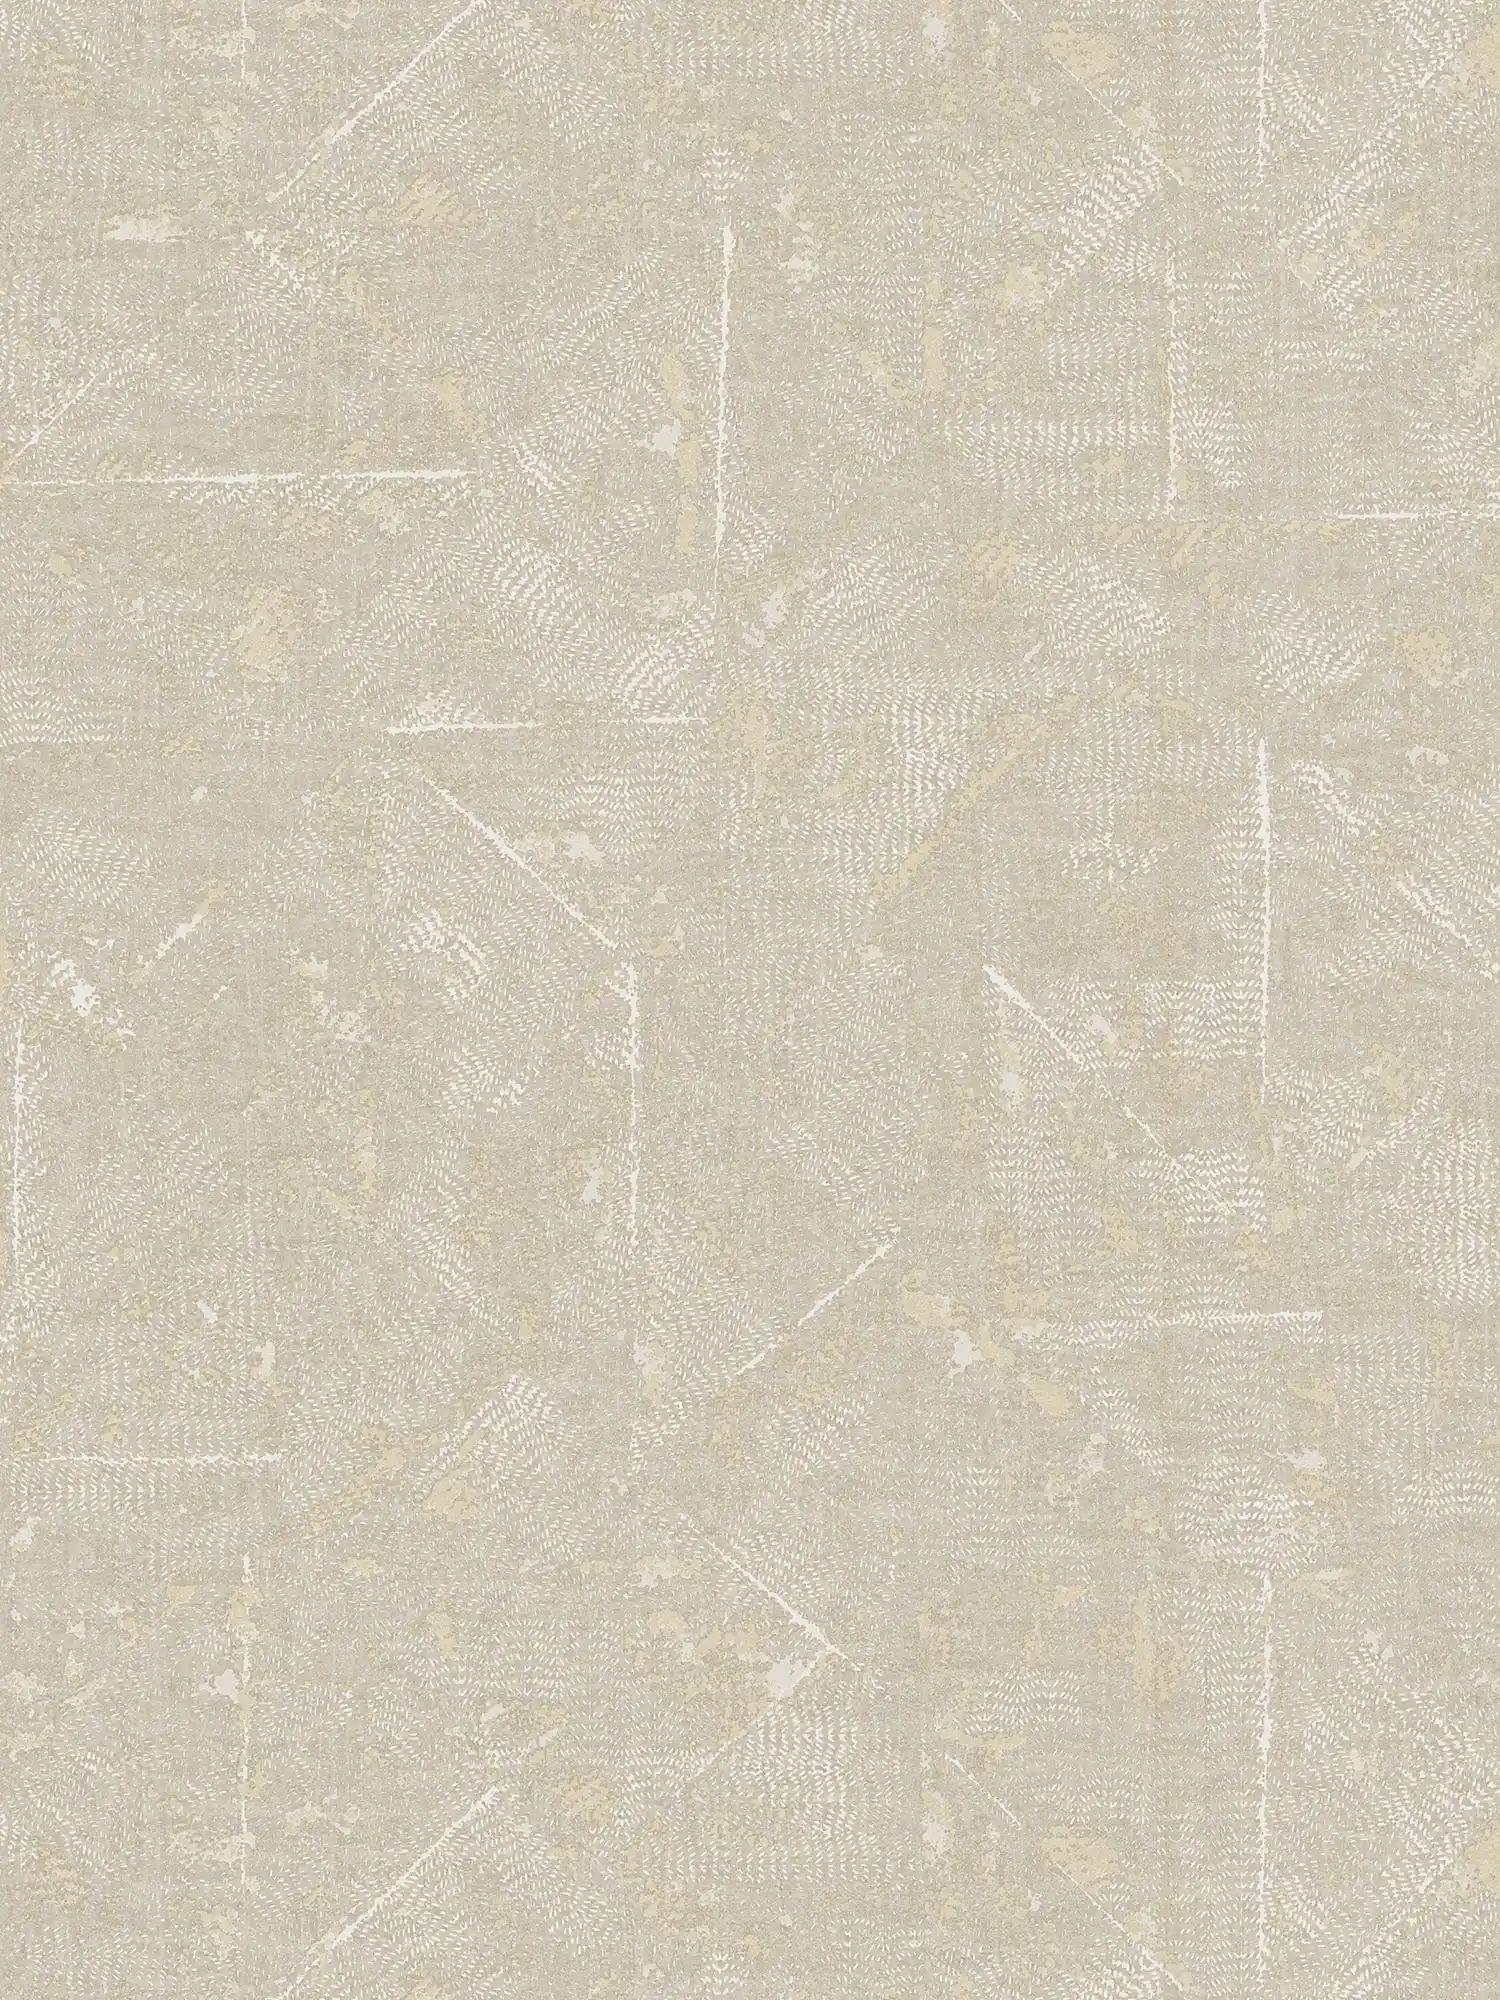 papel pintado beige con acentos plateados - gris, beige, plata
